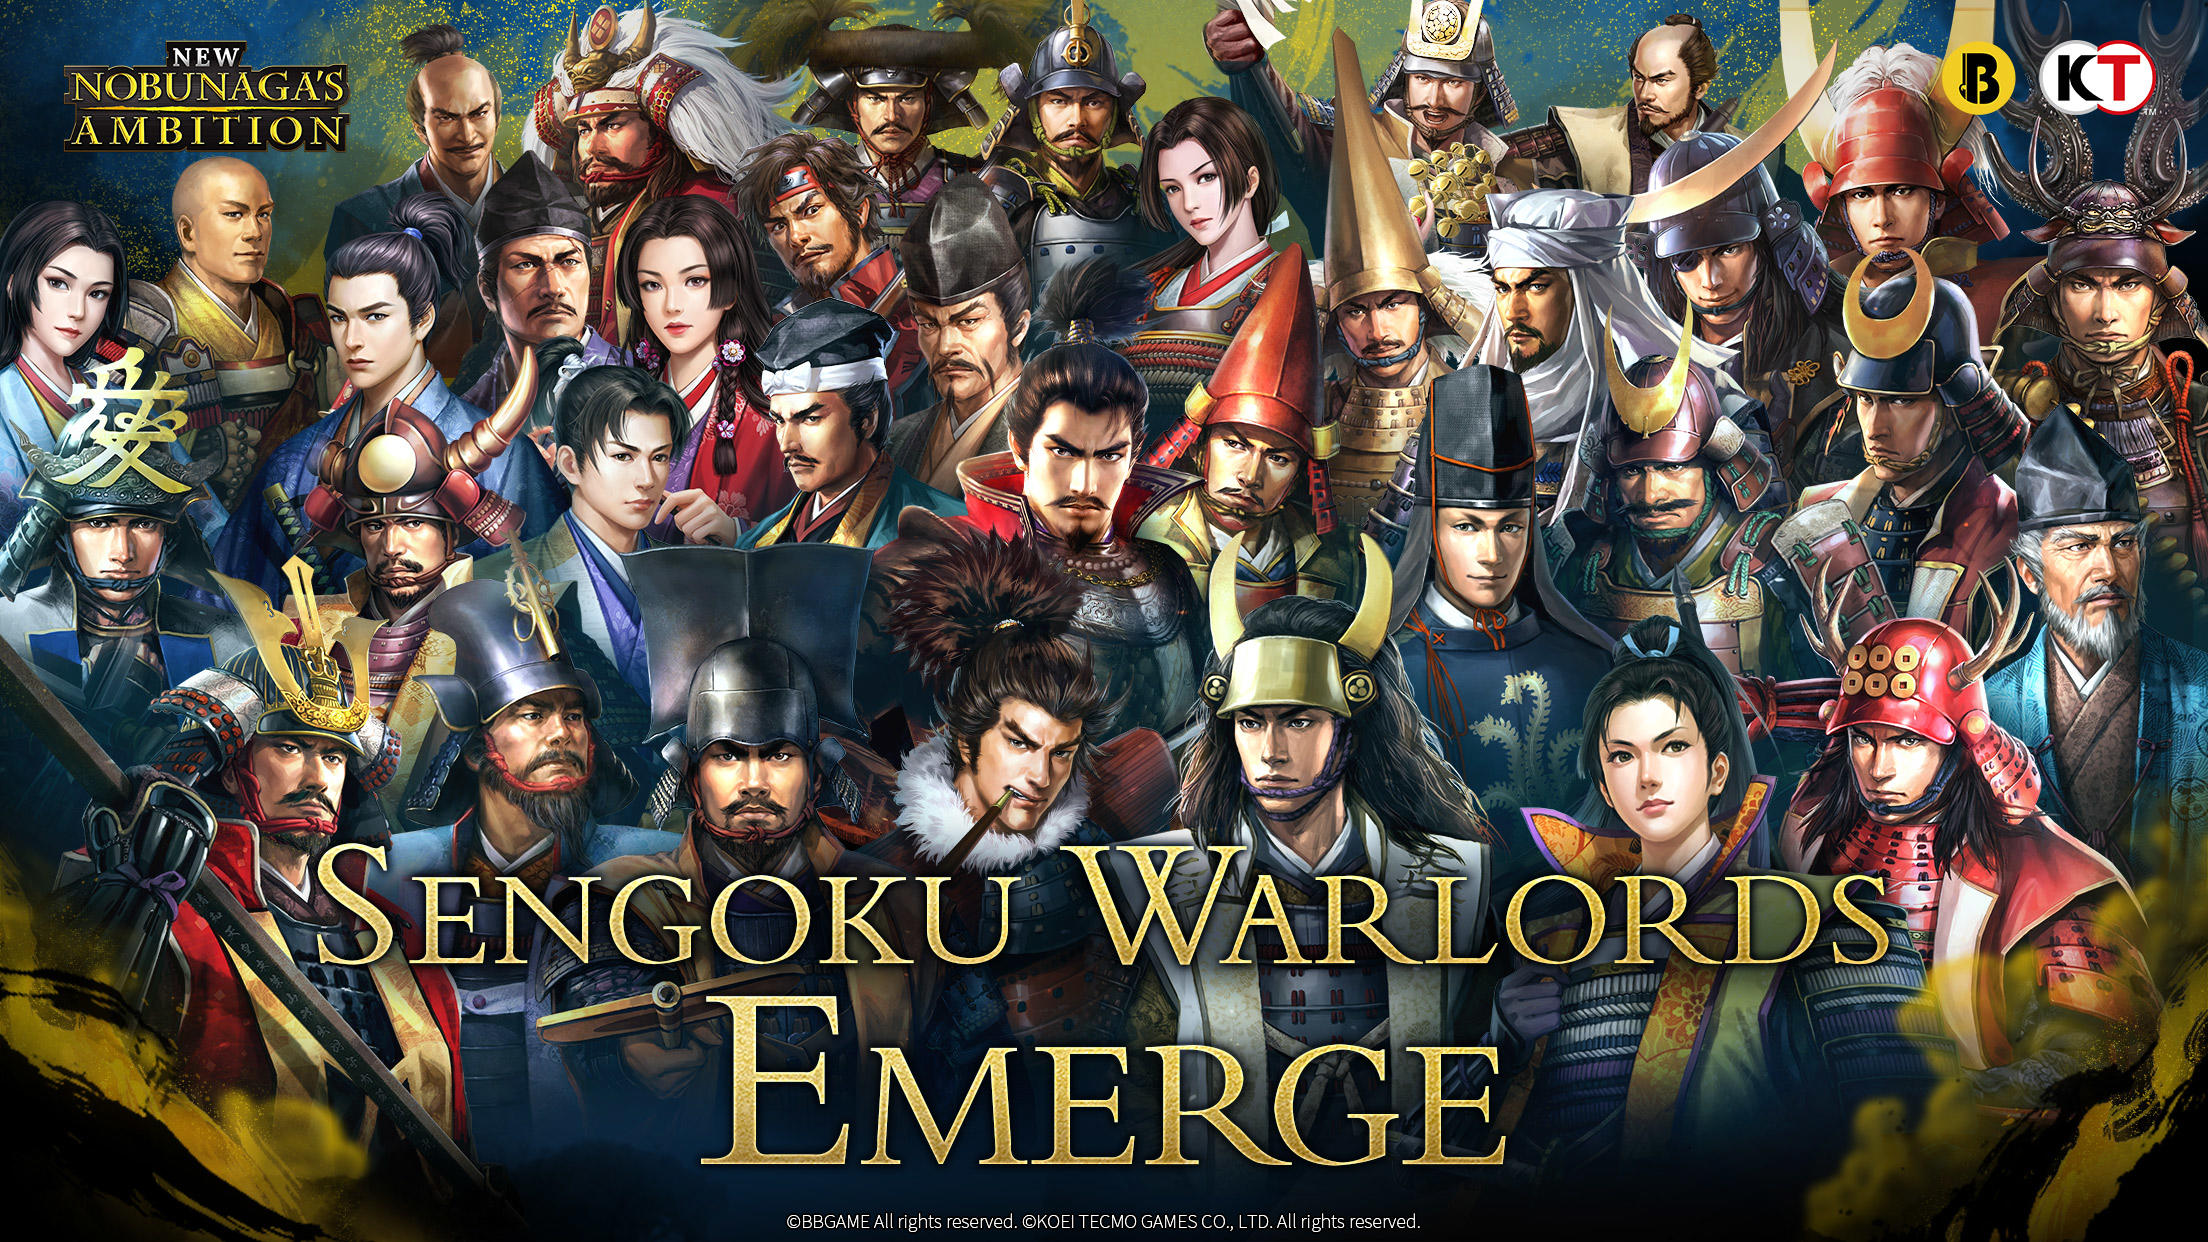 New Nobunaga's Ambition遊戲截圖